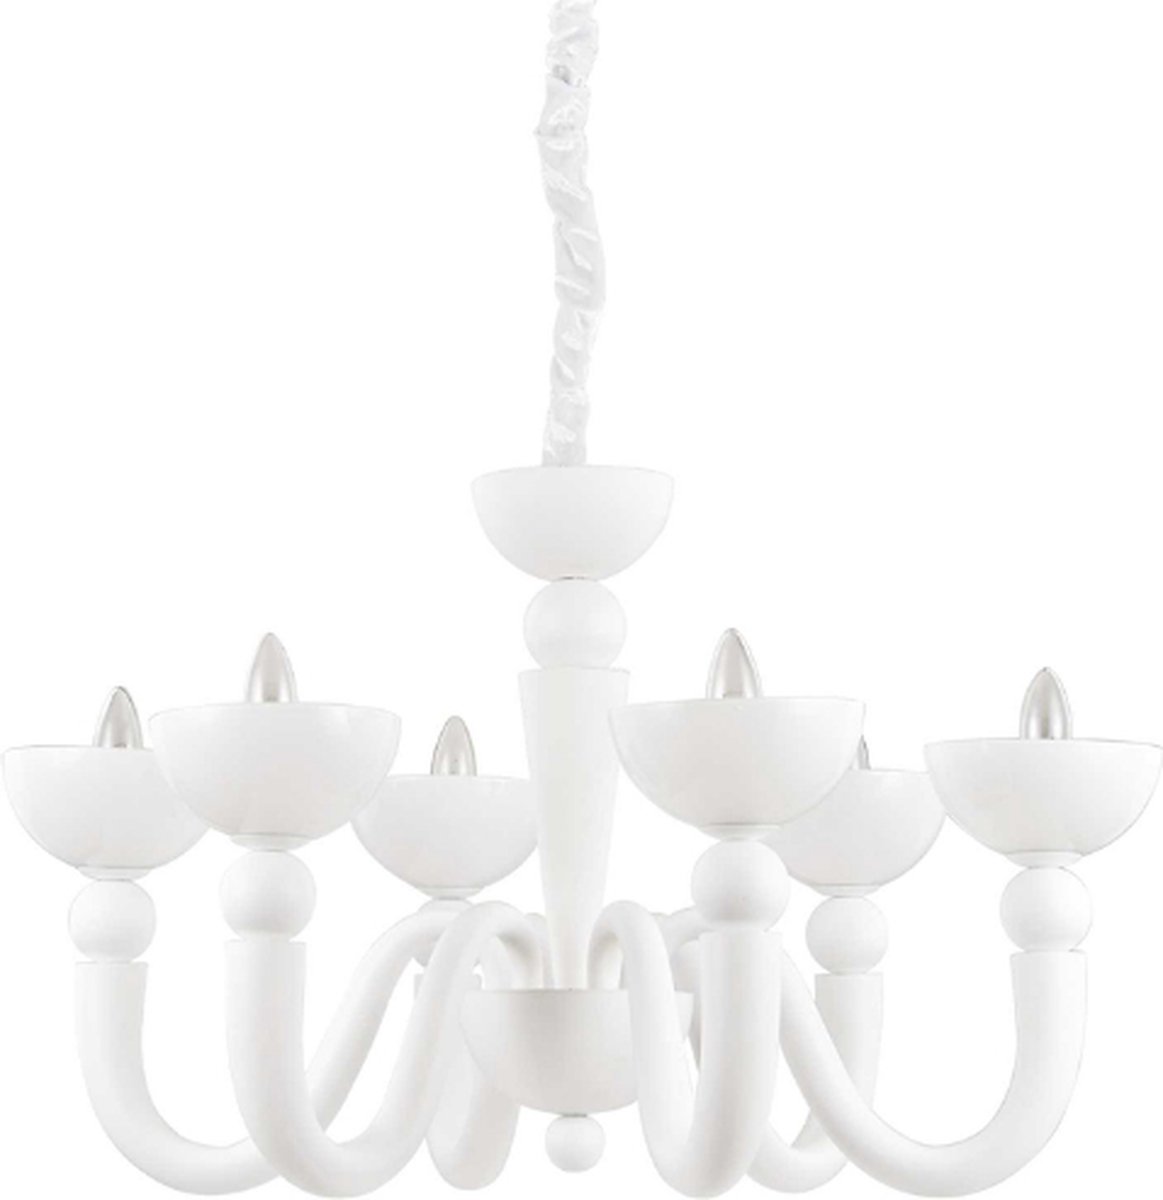 Ideal Lux - Bon bon - Hanglamp - Metaal - E14 - Wit - Voor binnen - Lampen - Woonkamer - Eetkamer - Keuken